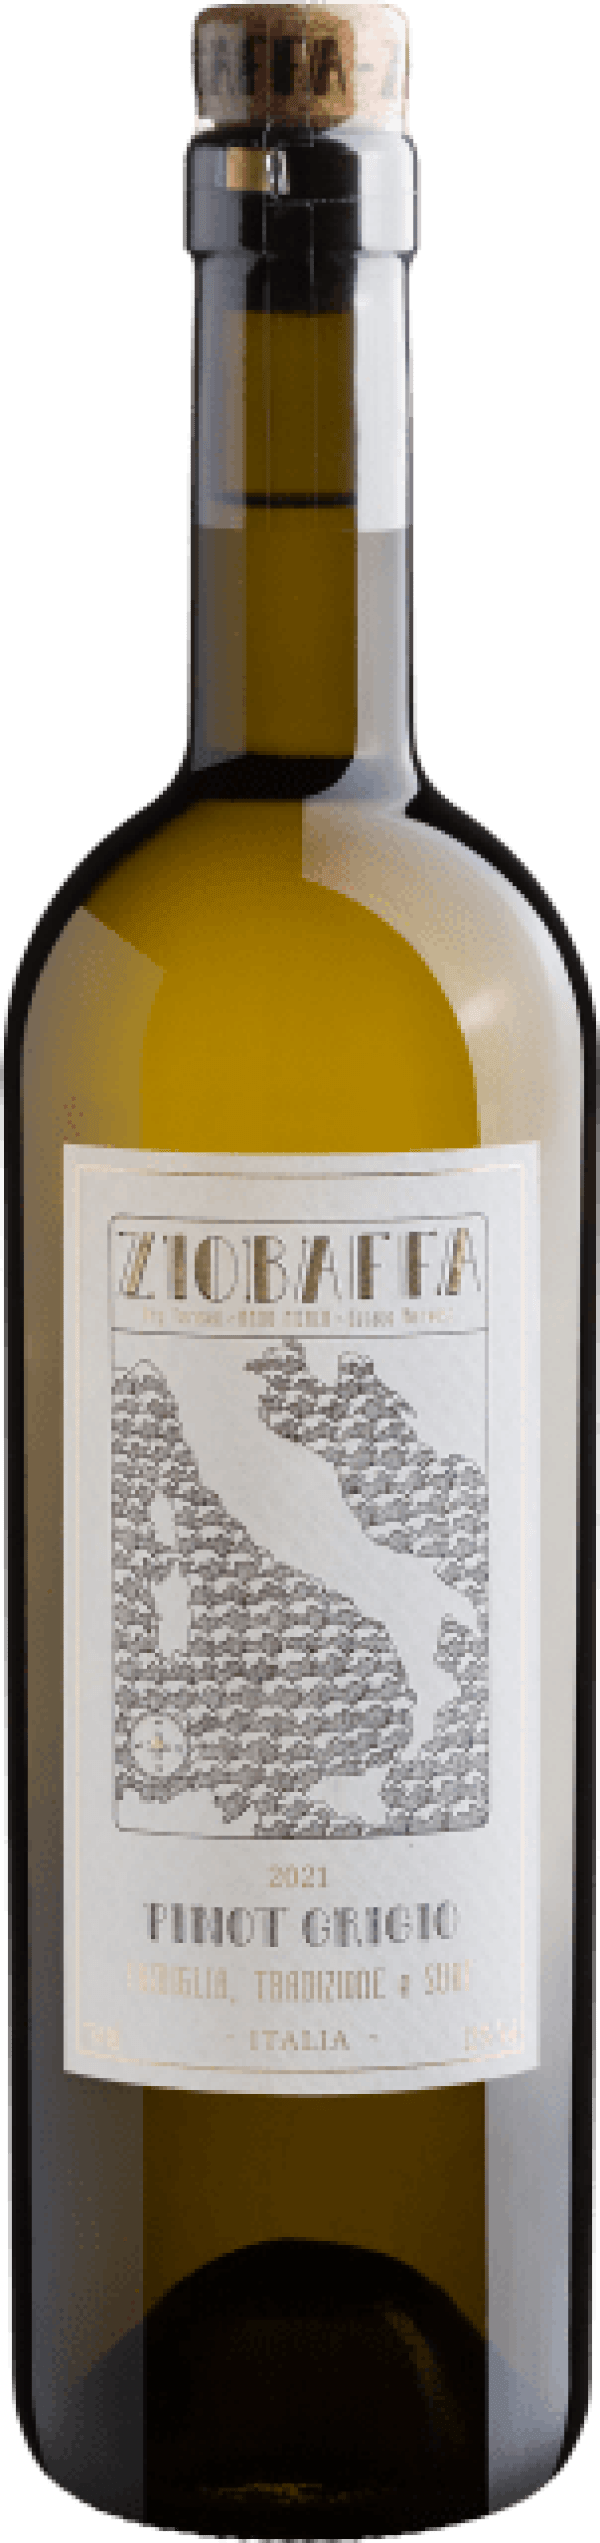 Ziobaffa Pinot Grigio Terre Siciliane IGT 2021